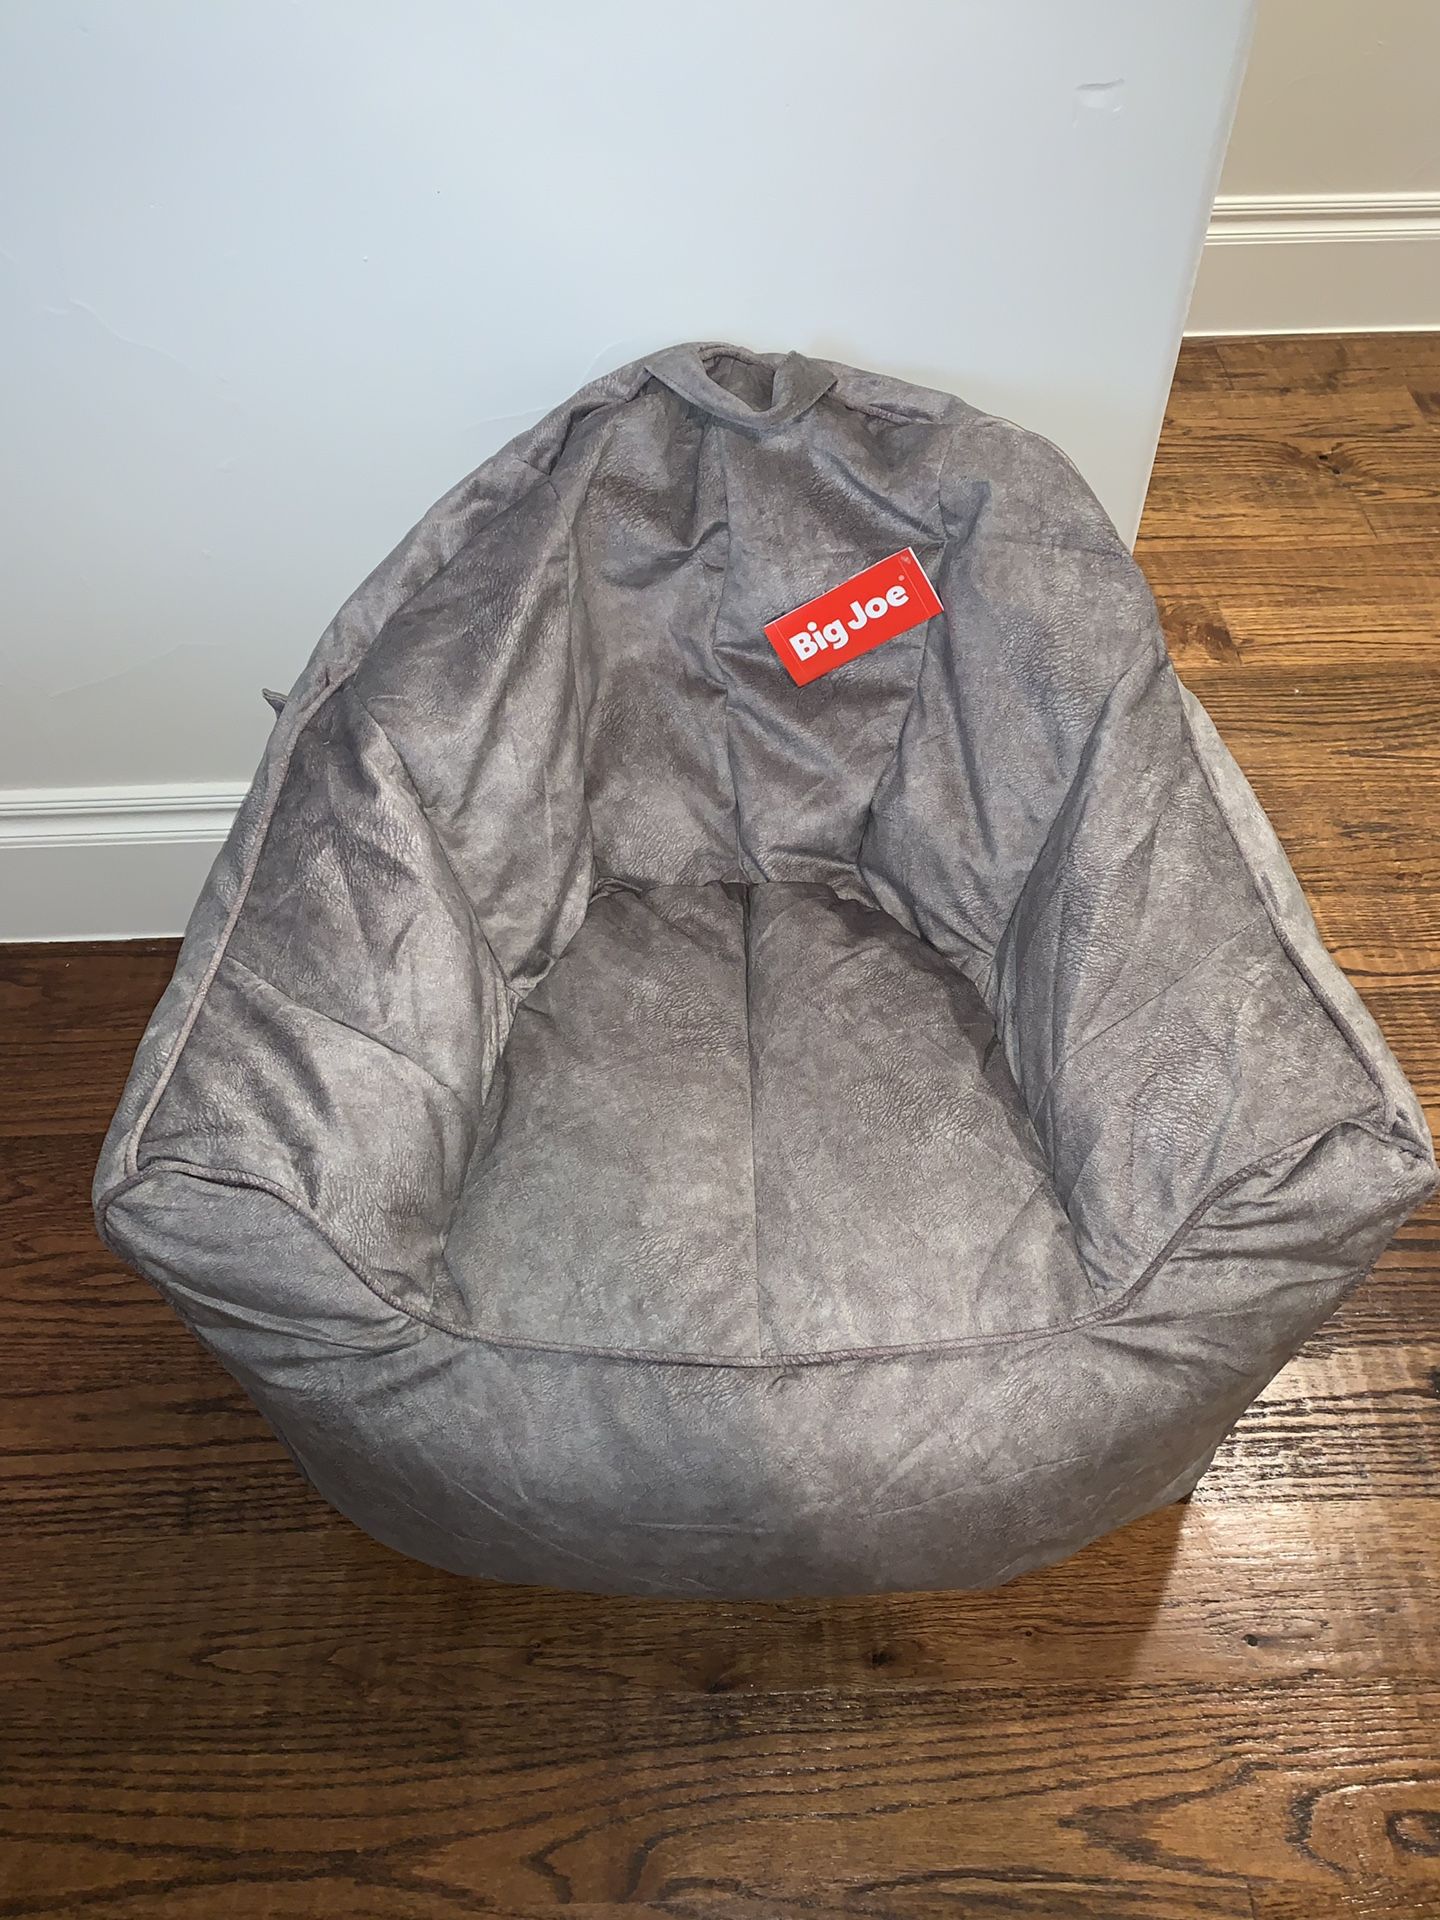 Big Joe Beanbag Chair NEW WITH TAGS for sale